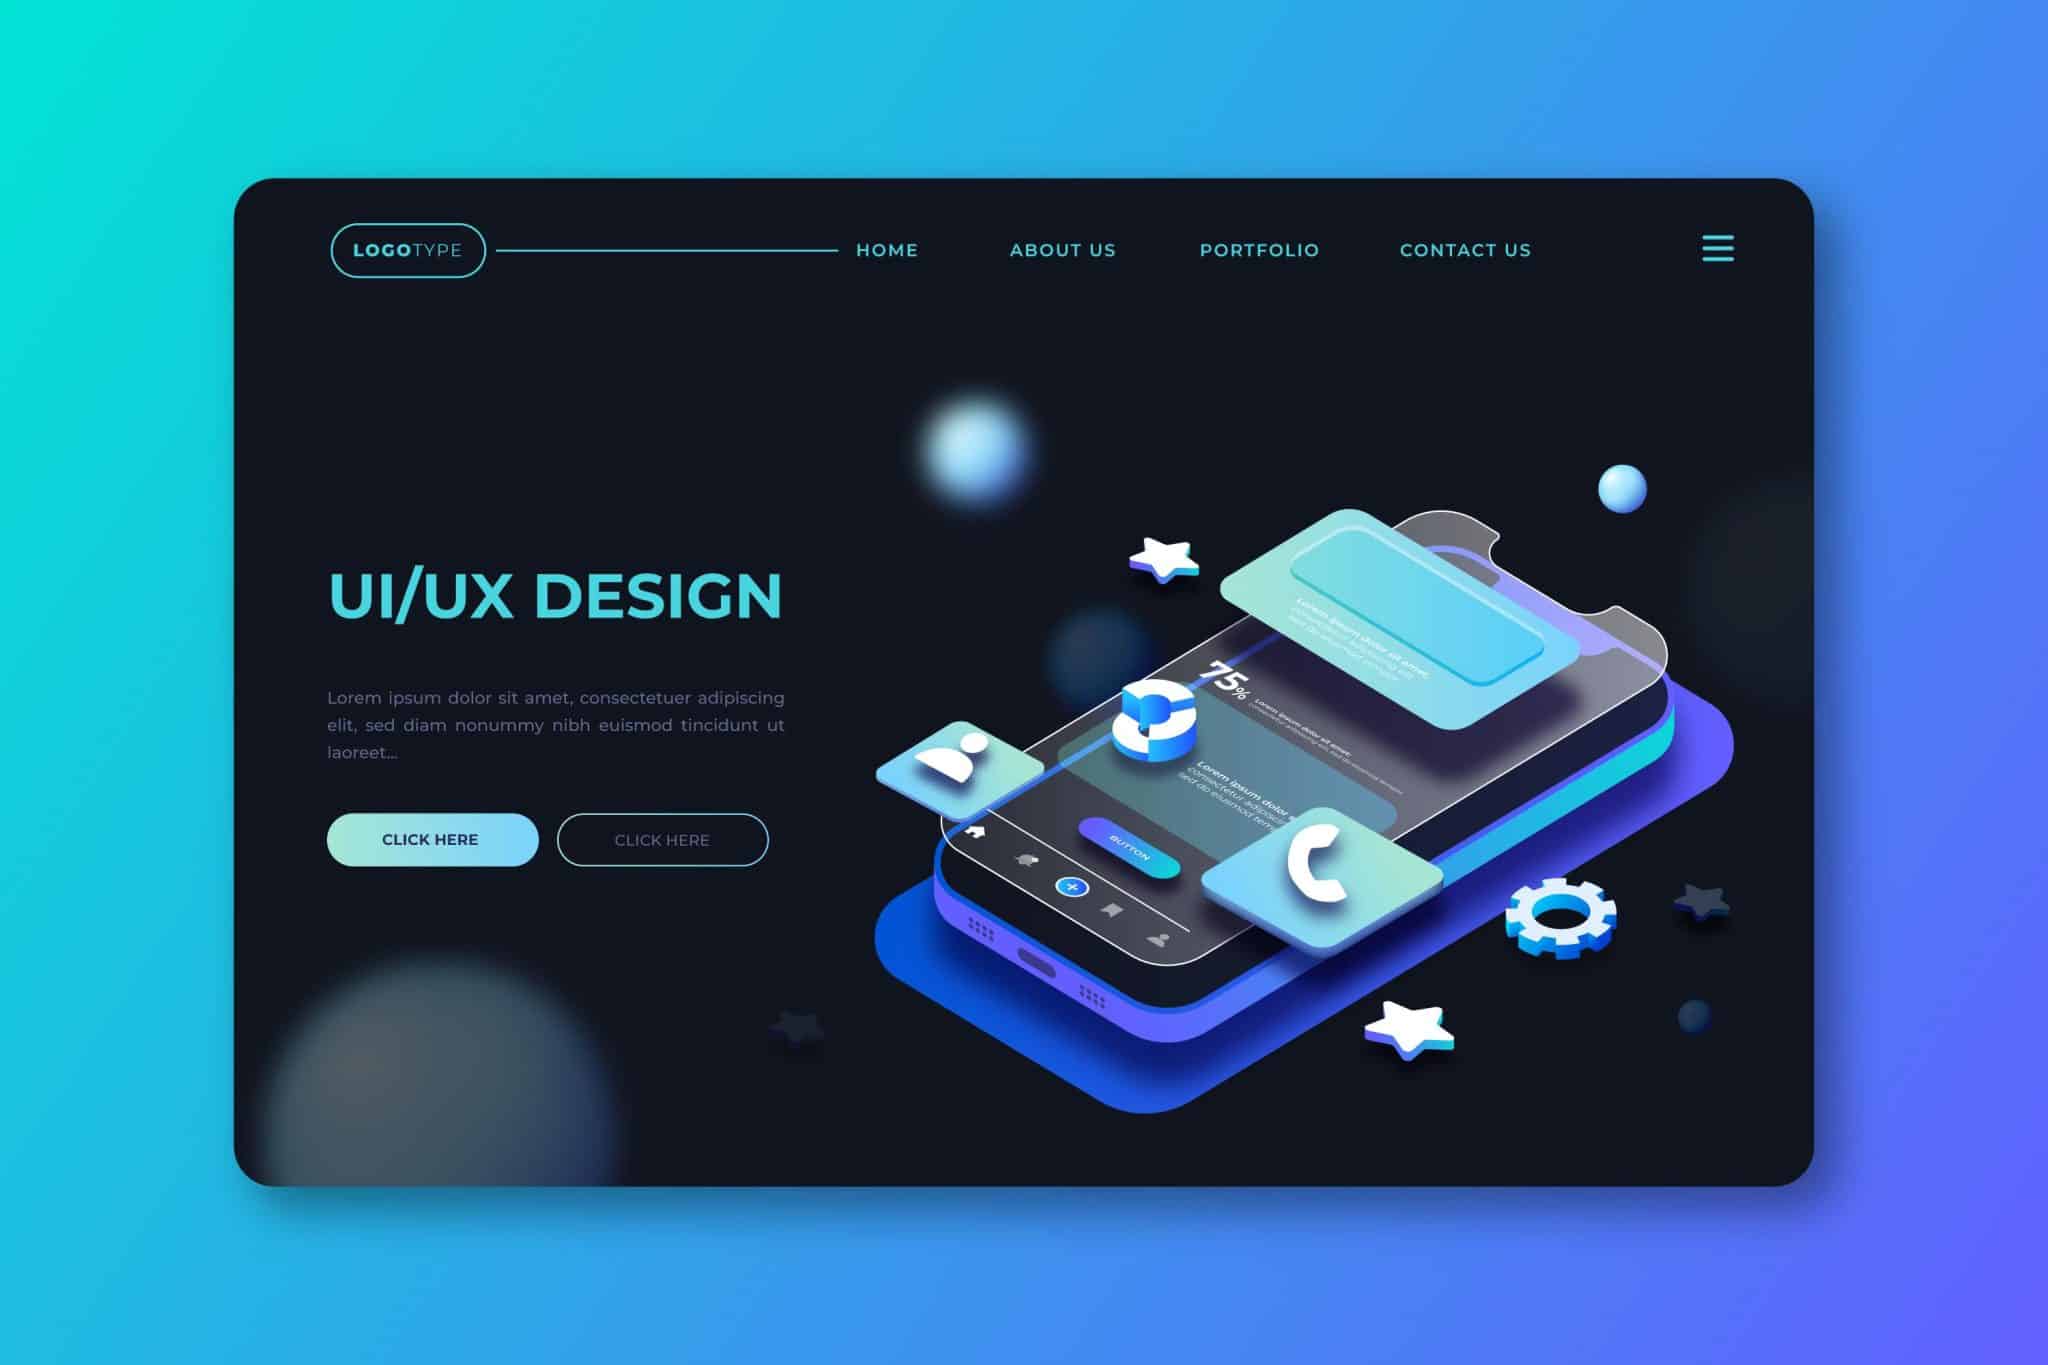 UI/UX Design with Figma